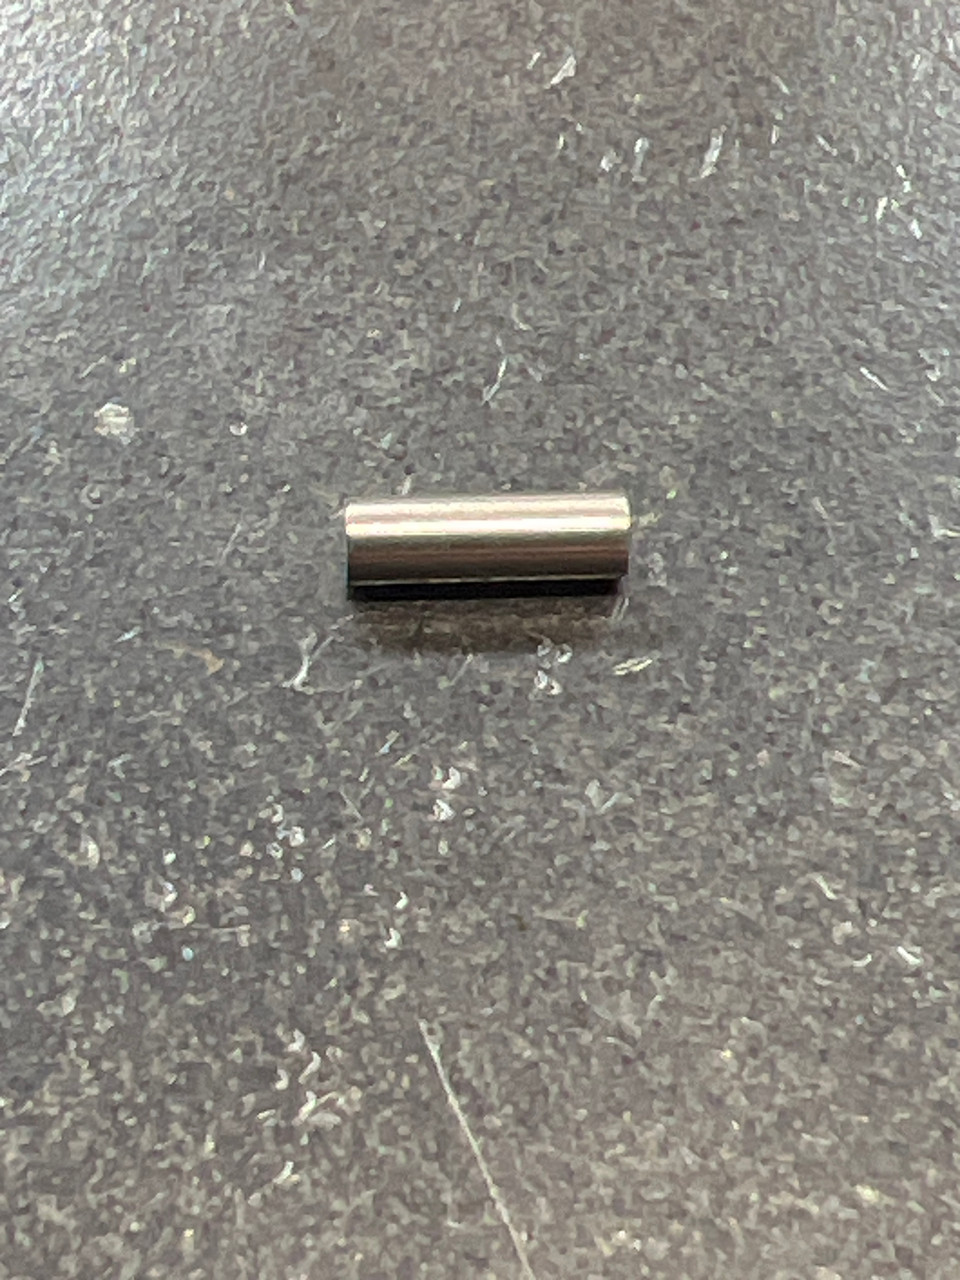 G33-9301 Spool Metal Pin